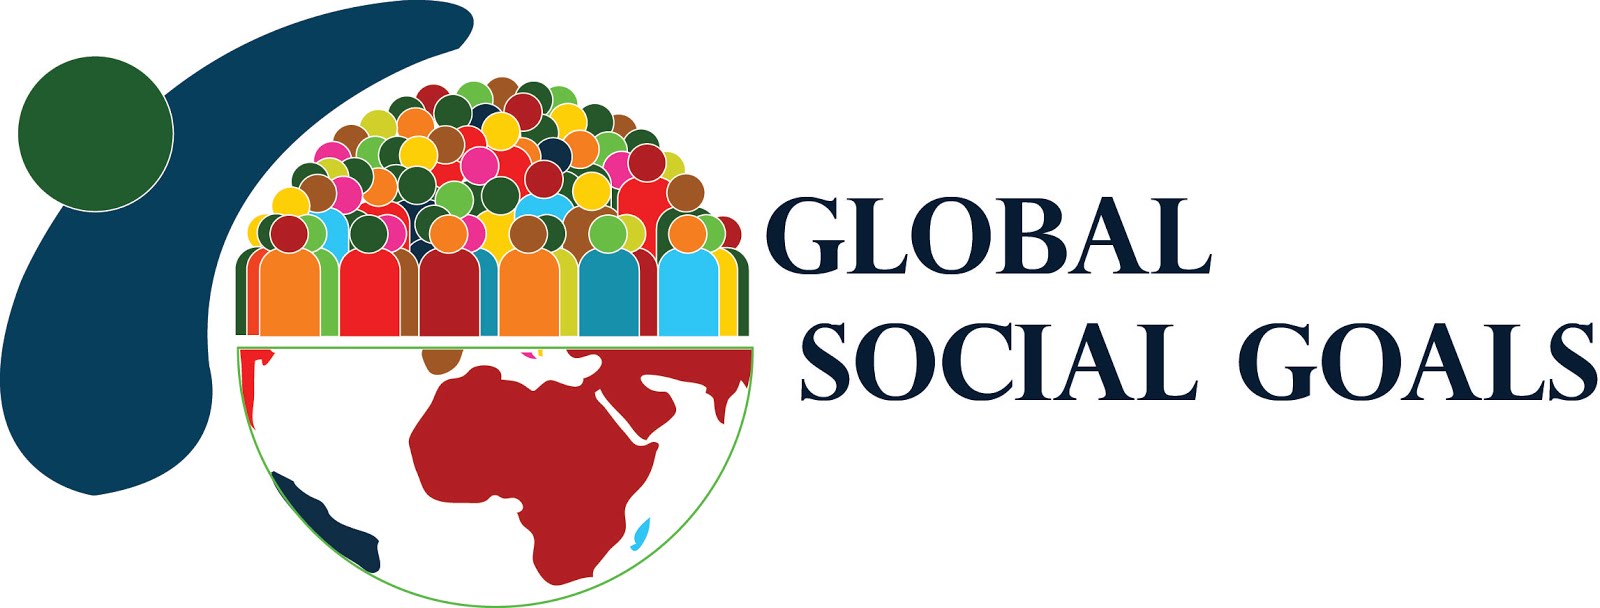 MY JOURNEY TOWARDS GLOBAL SOCIAL GOALS